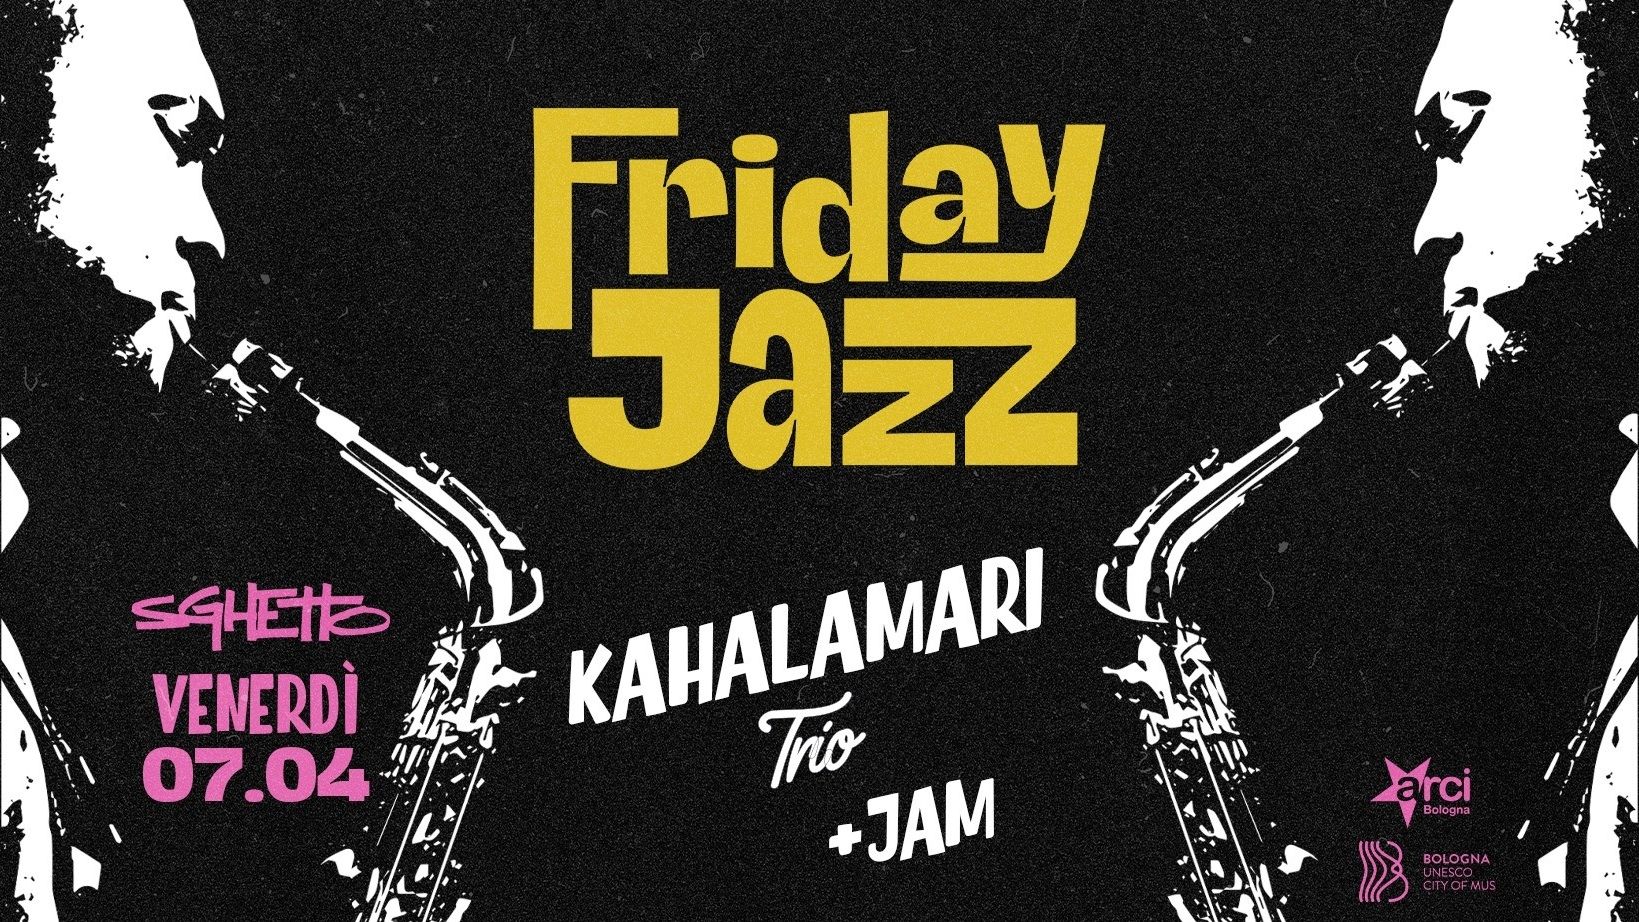 Friday Jazz - Kahlamari Trio + jam